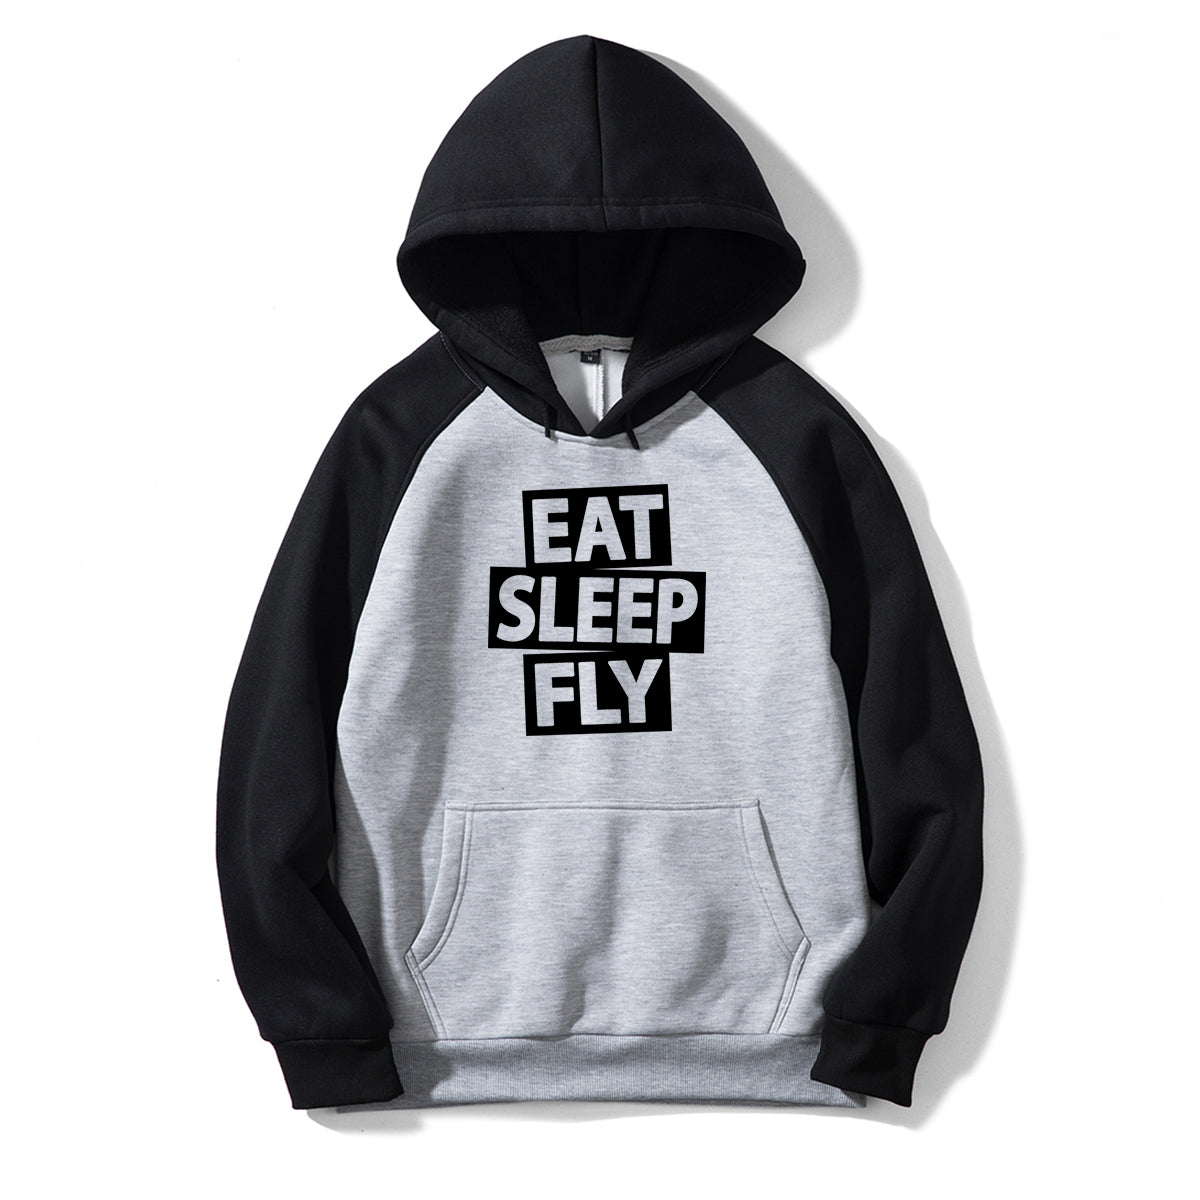 Eat Sleep Fly Designed Colourful Hoodies